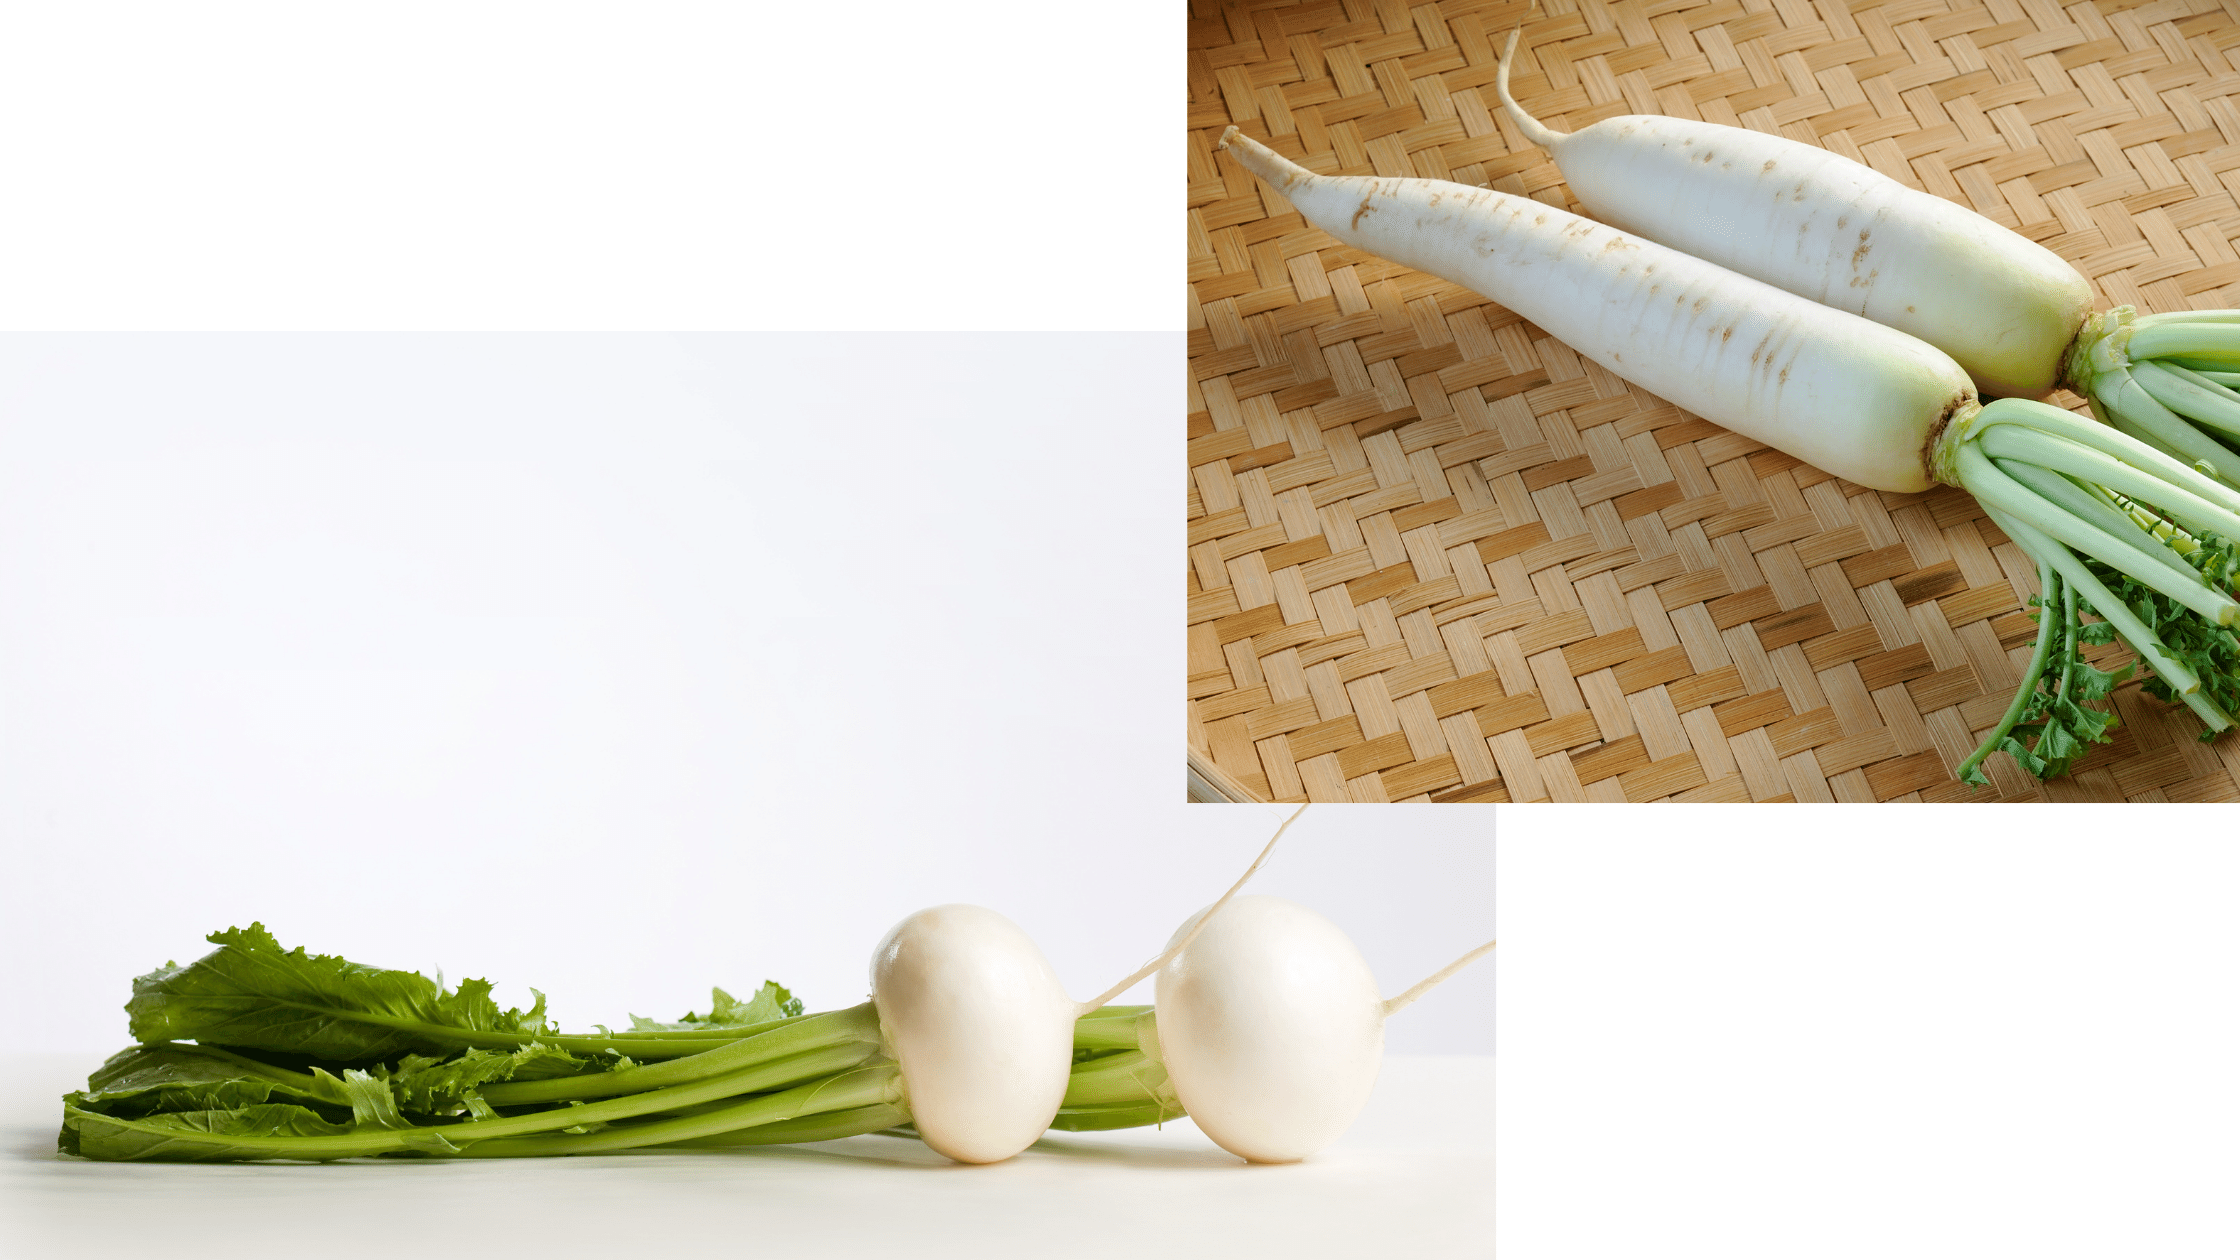 white radish vs daikon